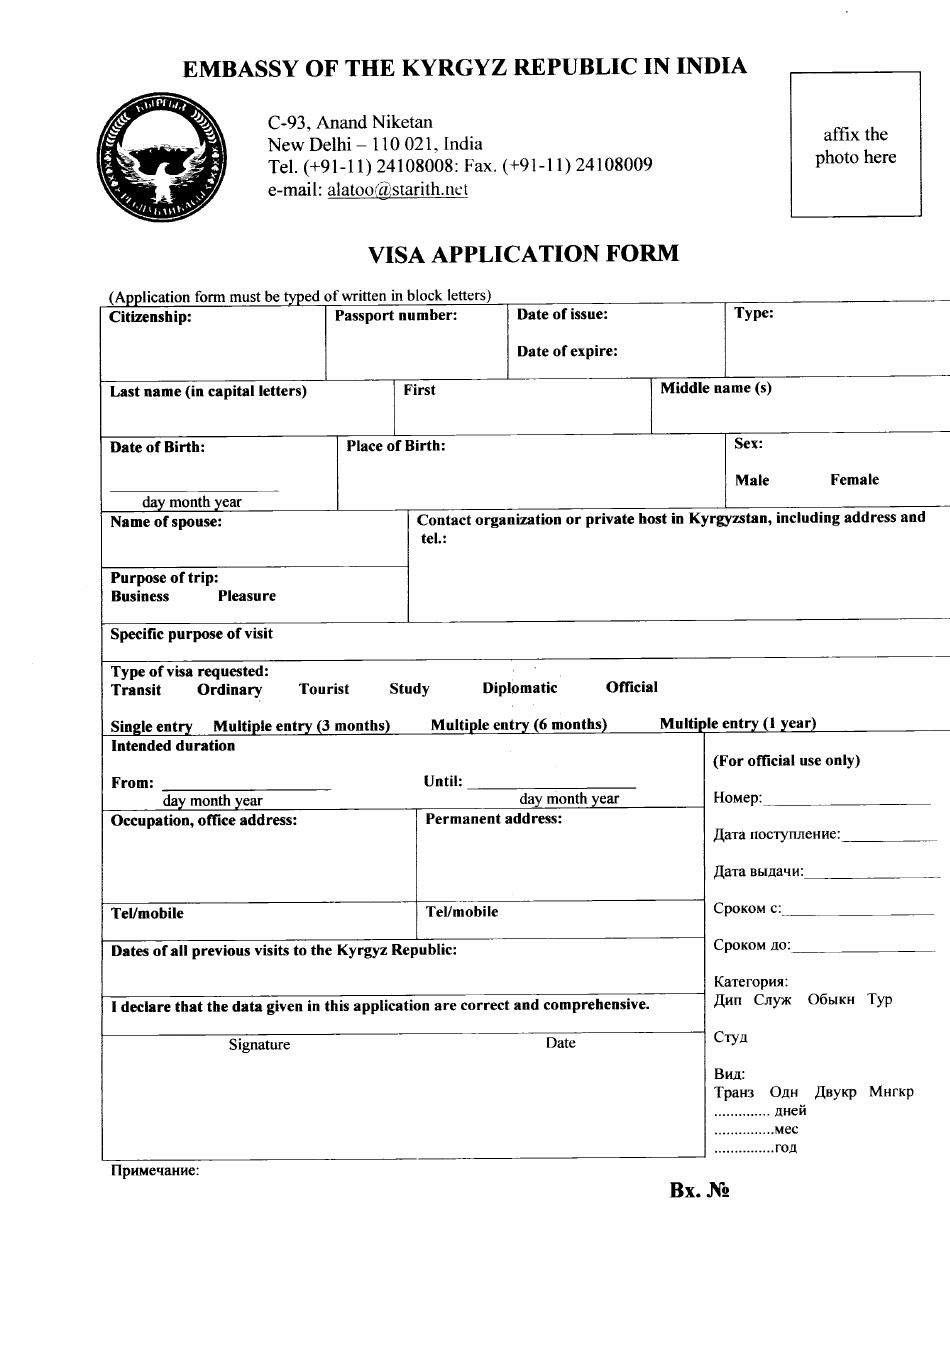 Kyrgyz Visa Application Form - Embassy of the Kyrgyz Republic in India - New Delhi, Delhi, India, Page 1